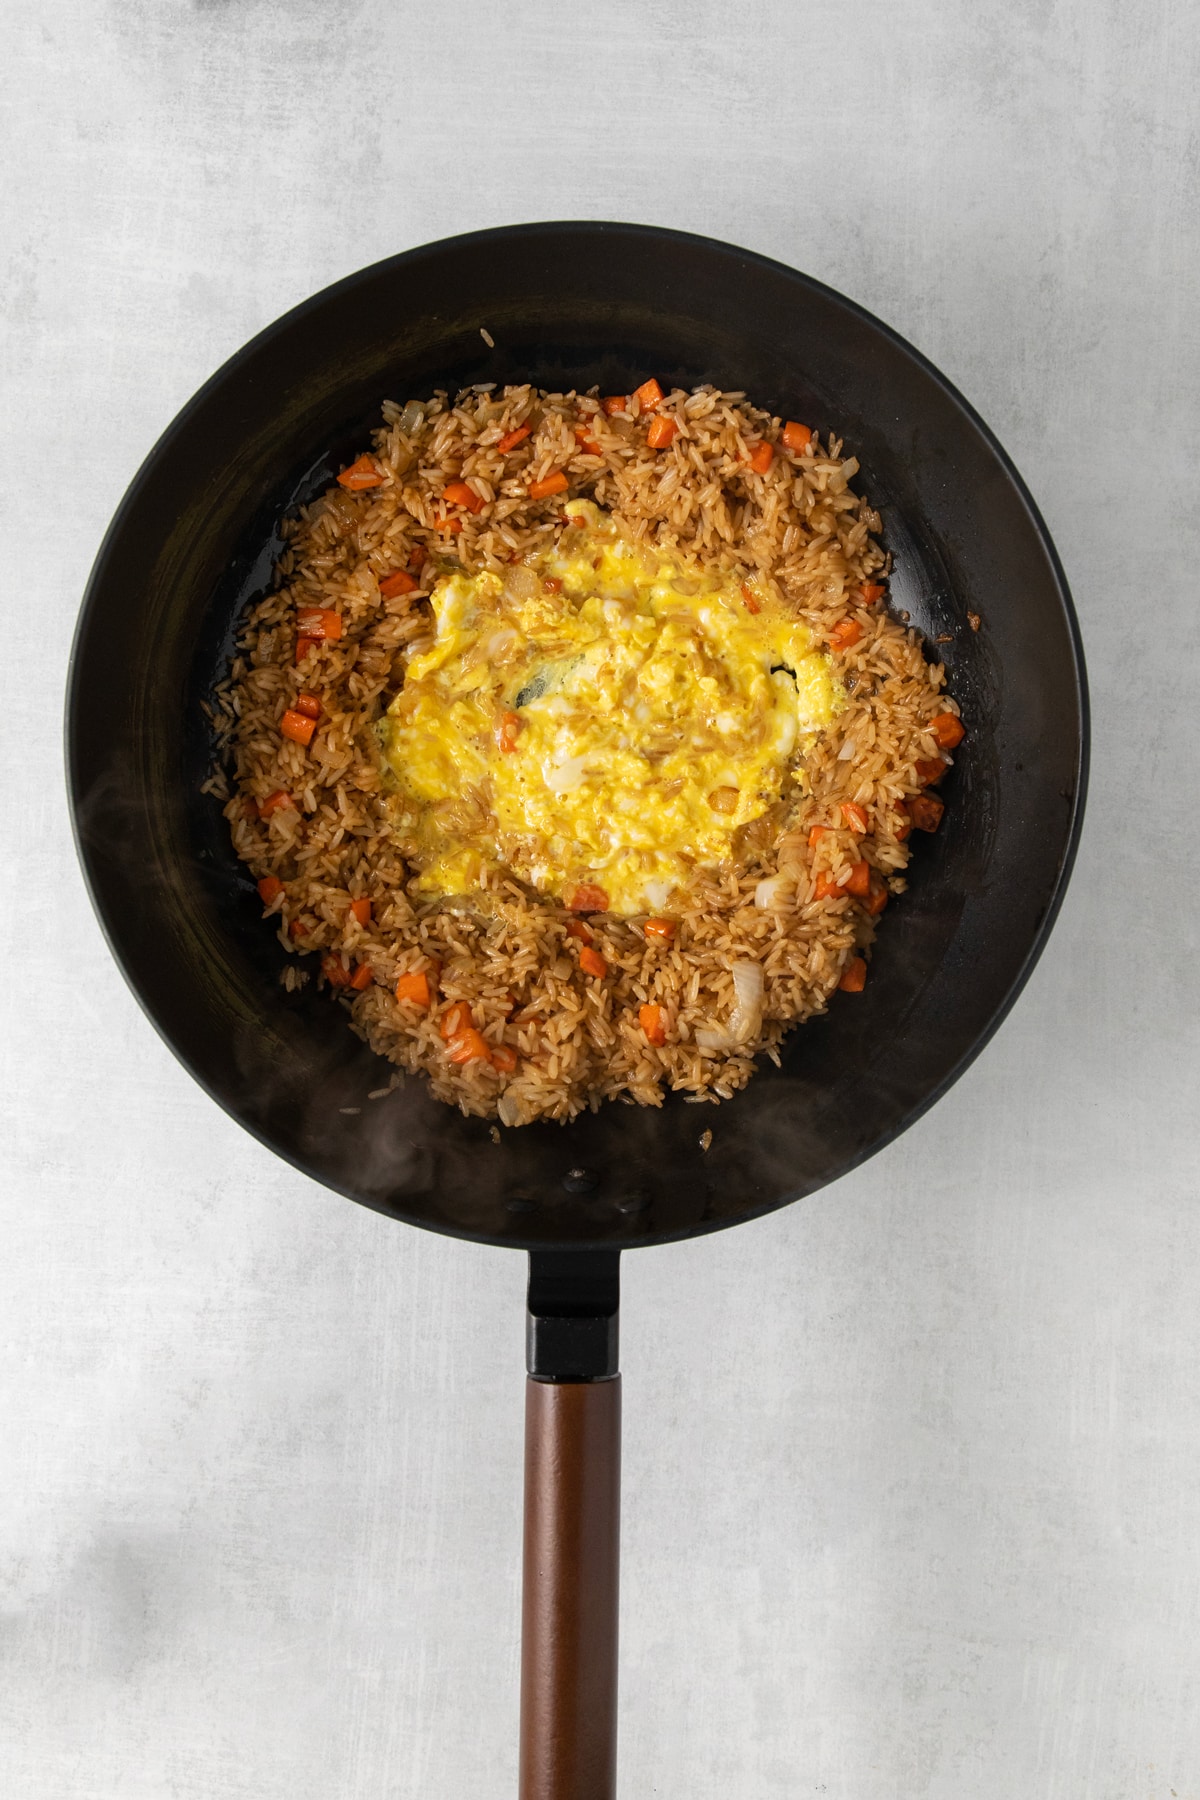 Adding egg to Easy Egg Fried Rice recipe